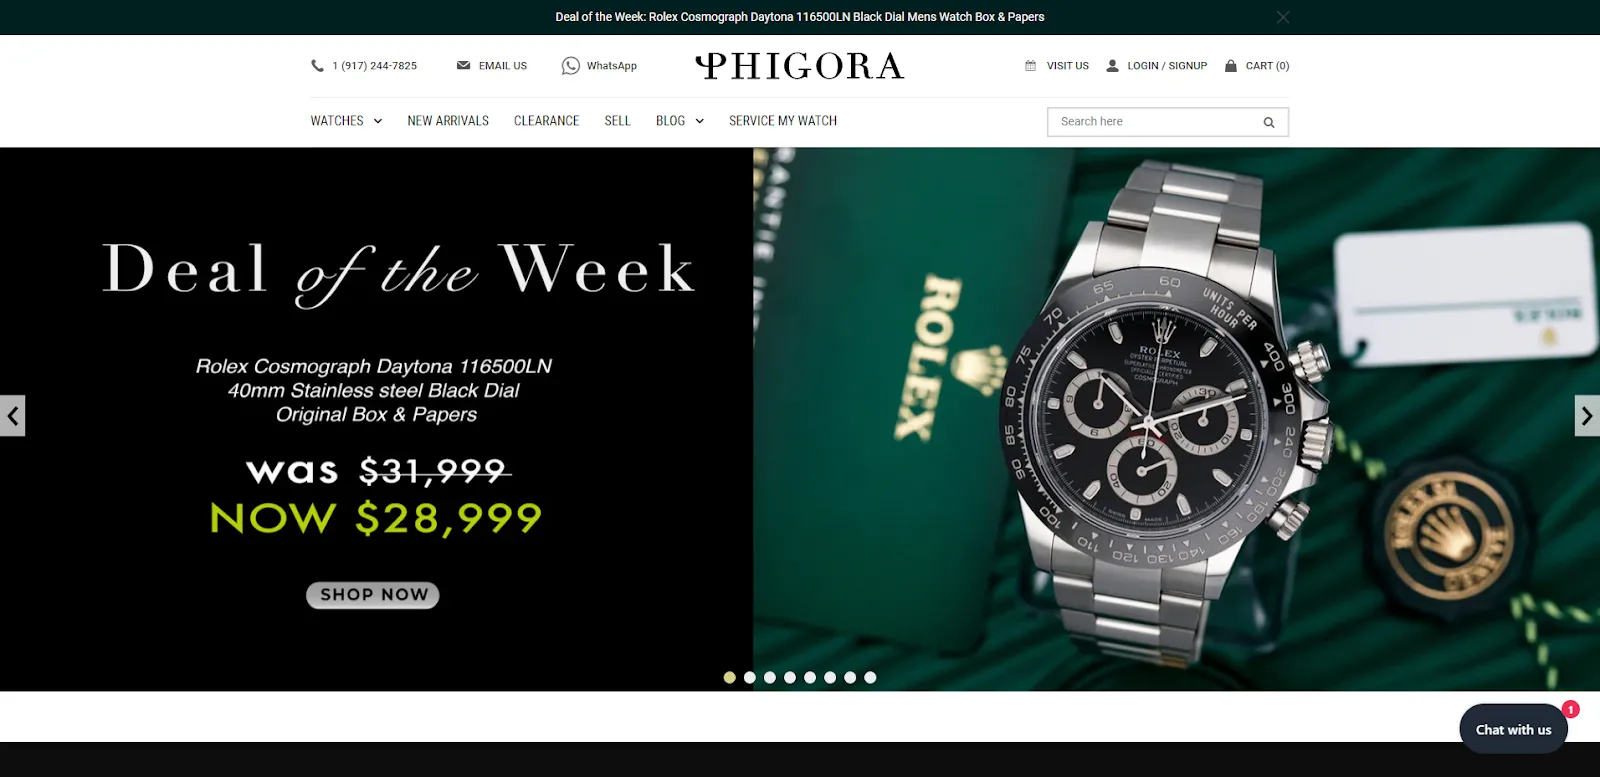 Luxury watch is a popular niche on Shopify